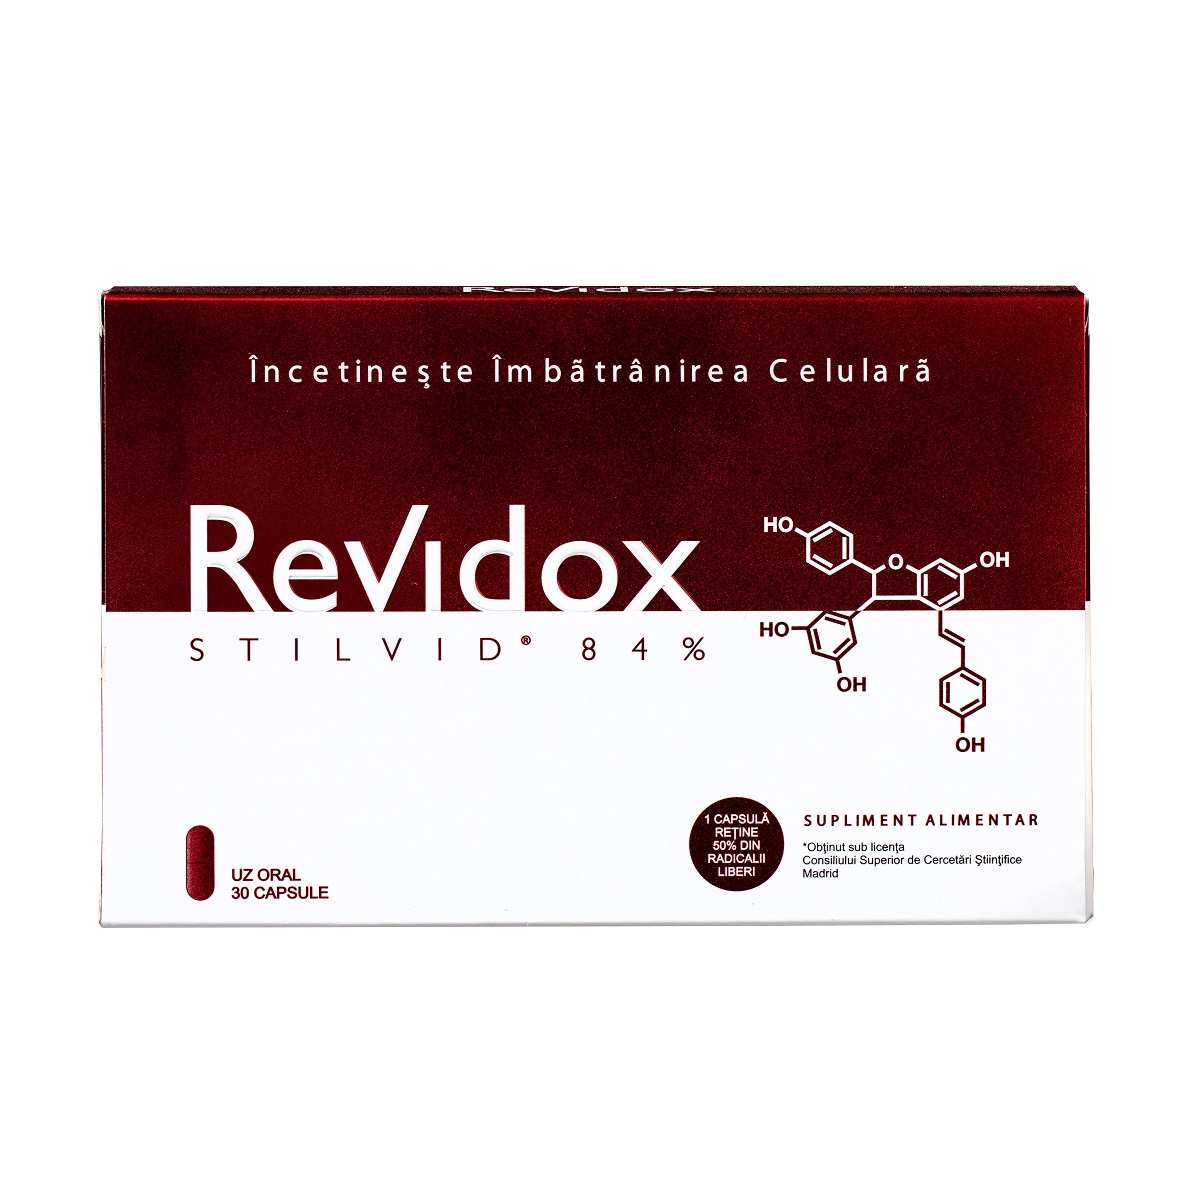 Stres oxidativ - Revidox x 30 capsule, medik-on.ro